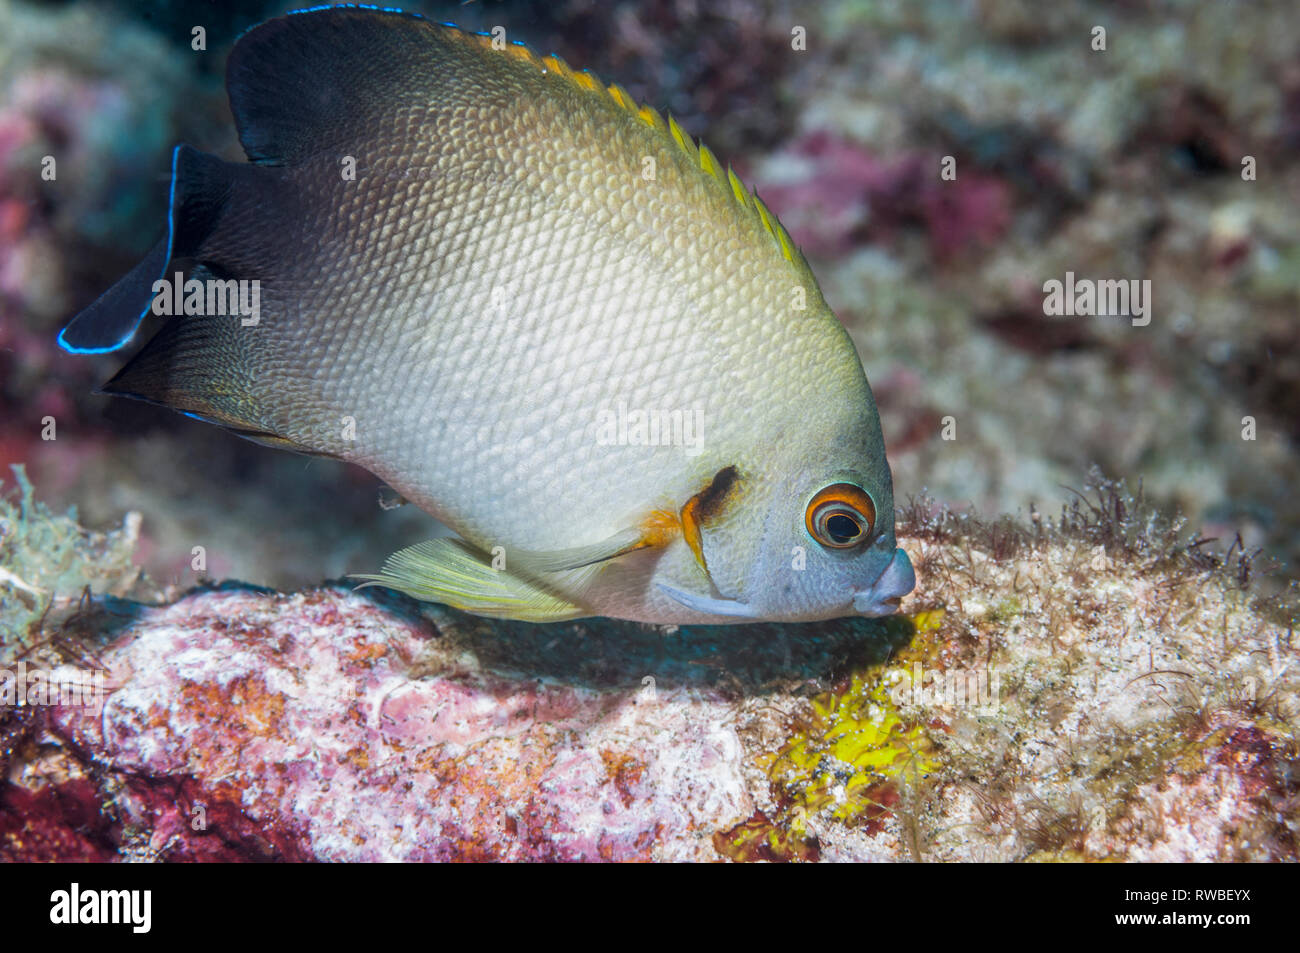 Pearlscale angelfish or Half black angelfish [Centropyge vrolikii].  Puerto Galera, Philippines. Stock Photo